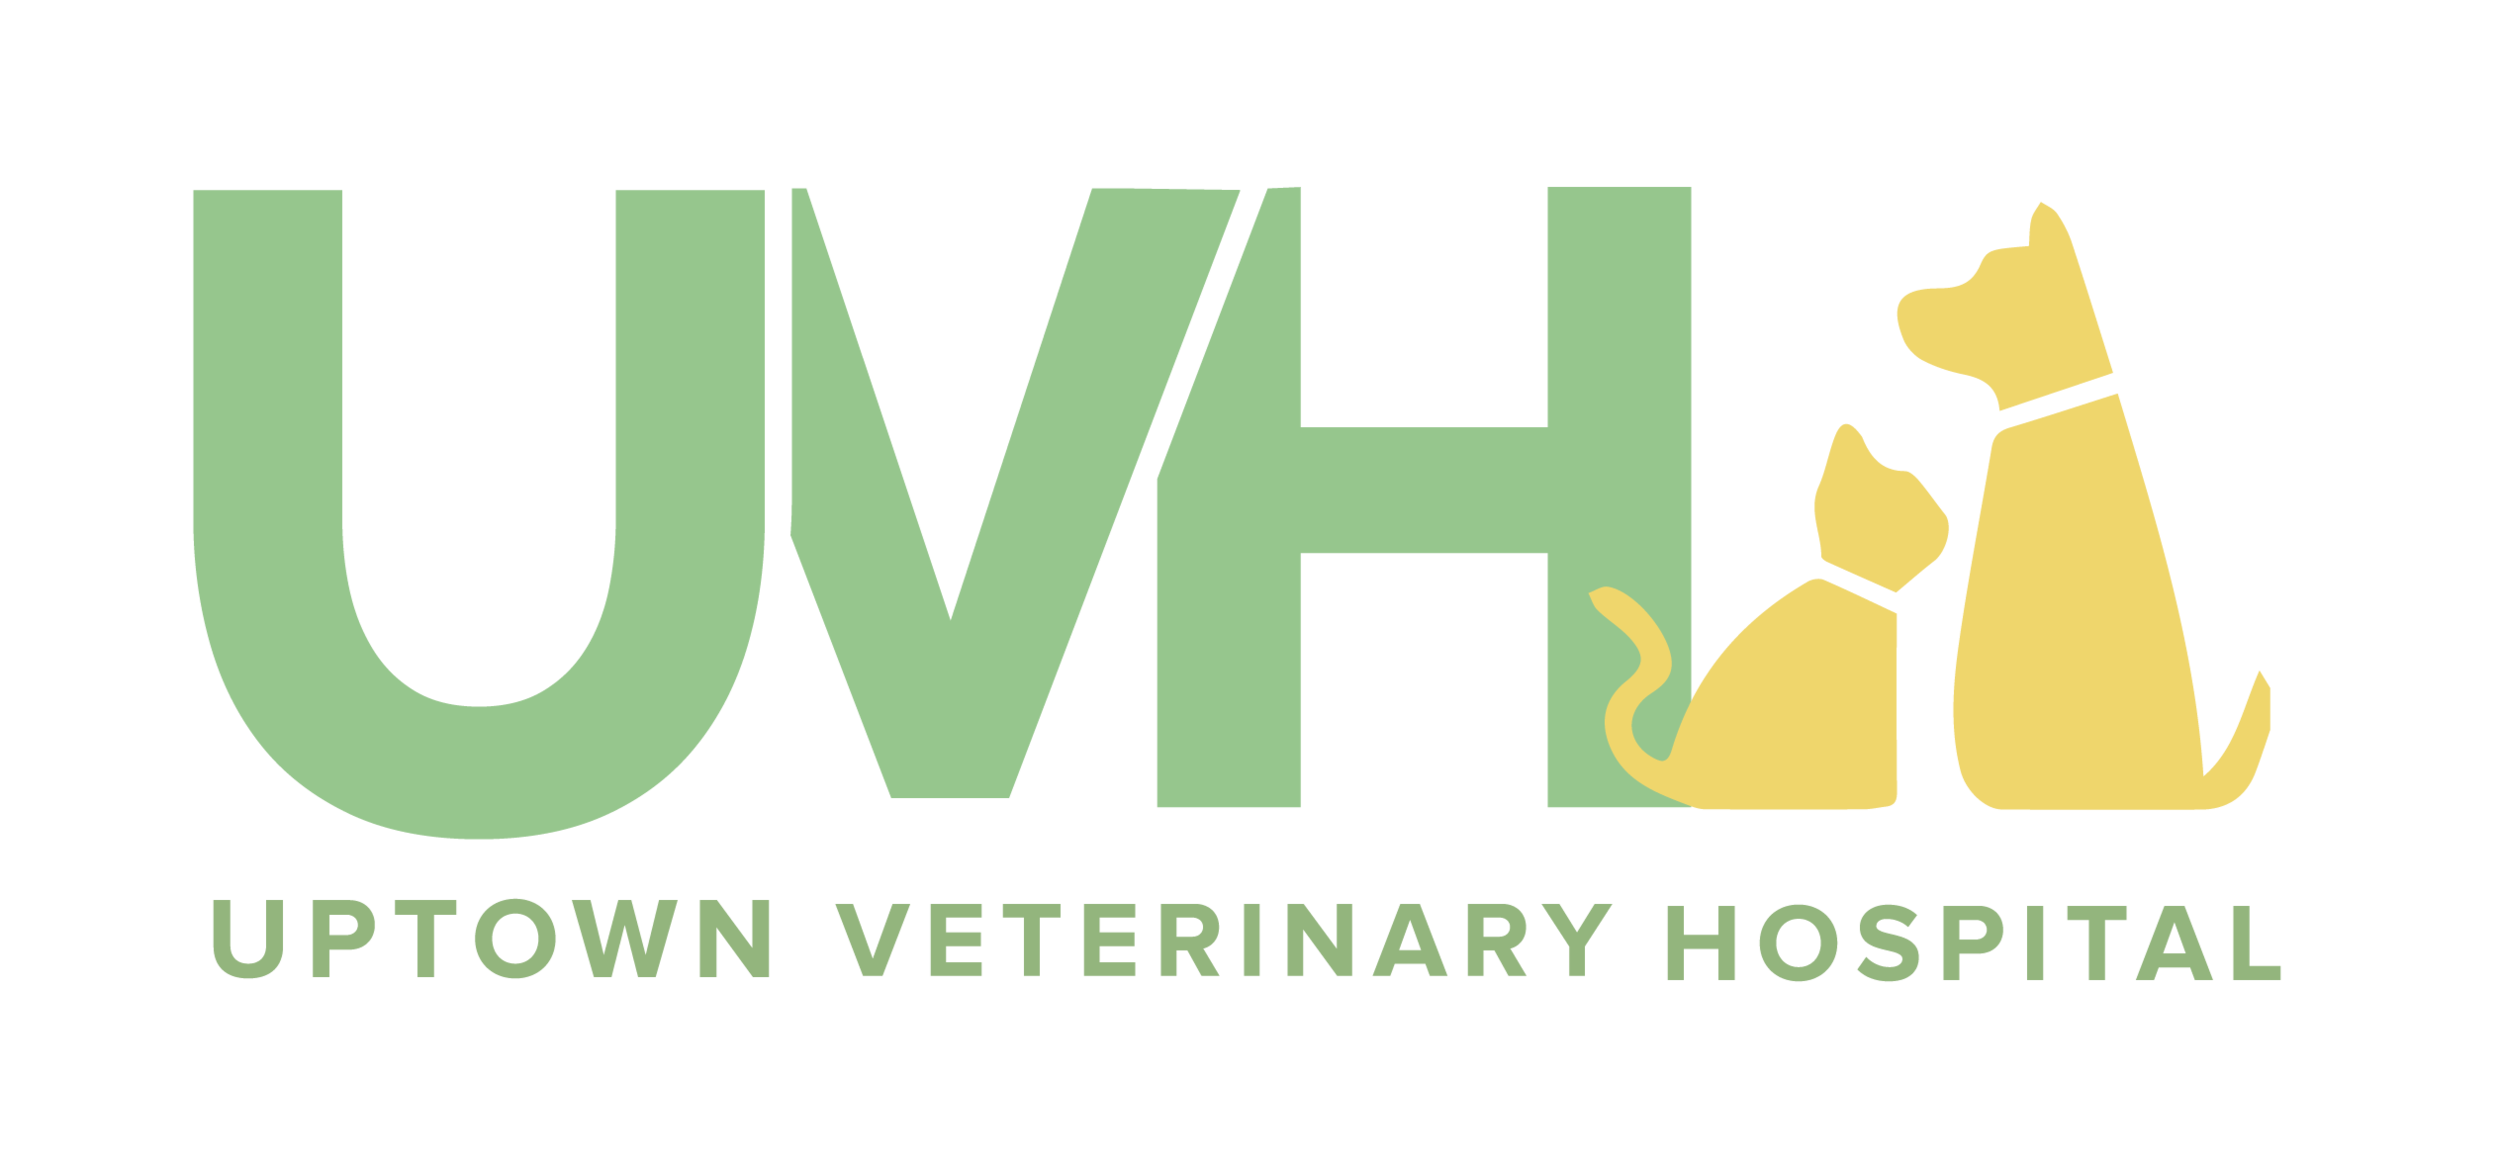 Uptown Veterinary Hospital 